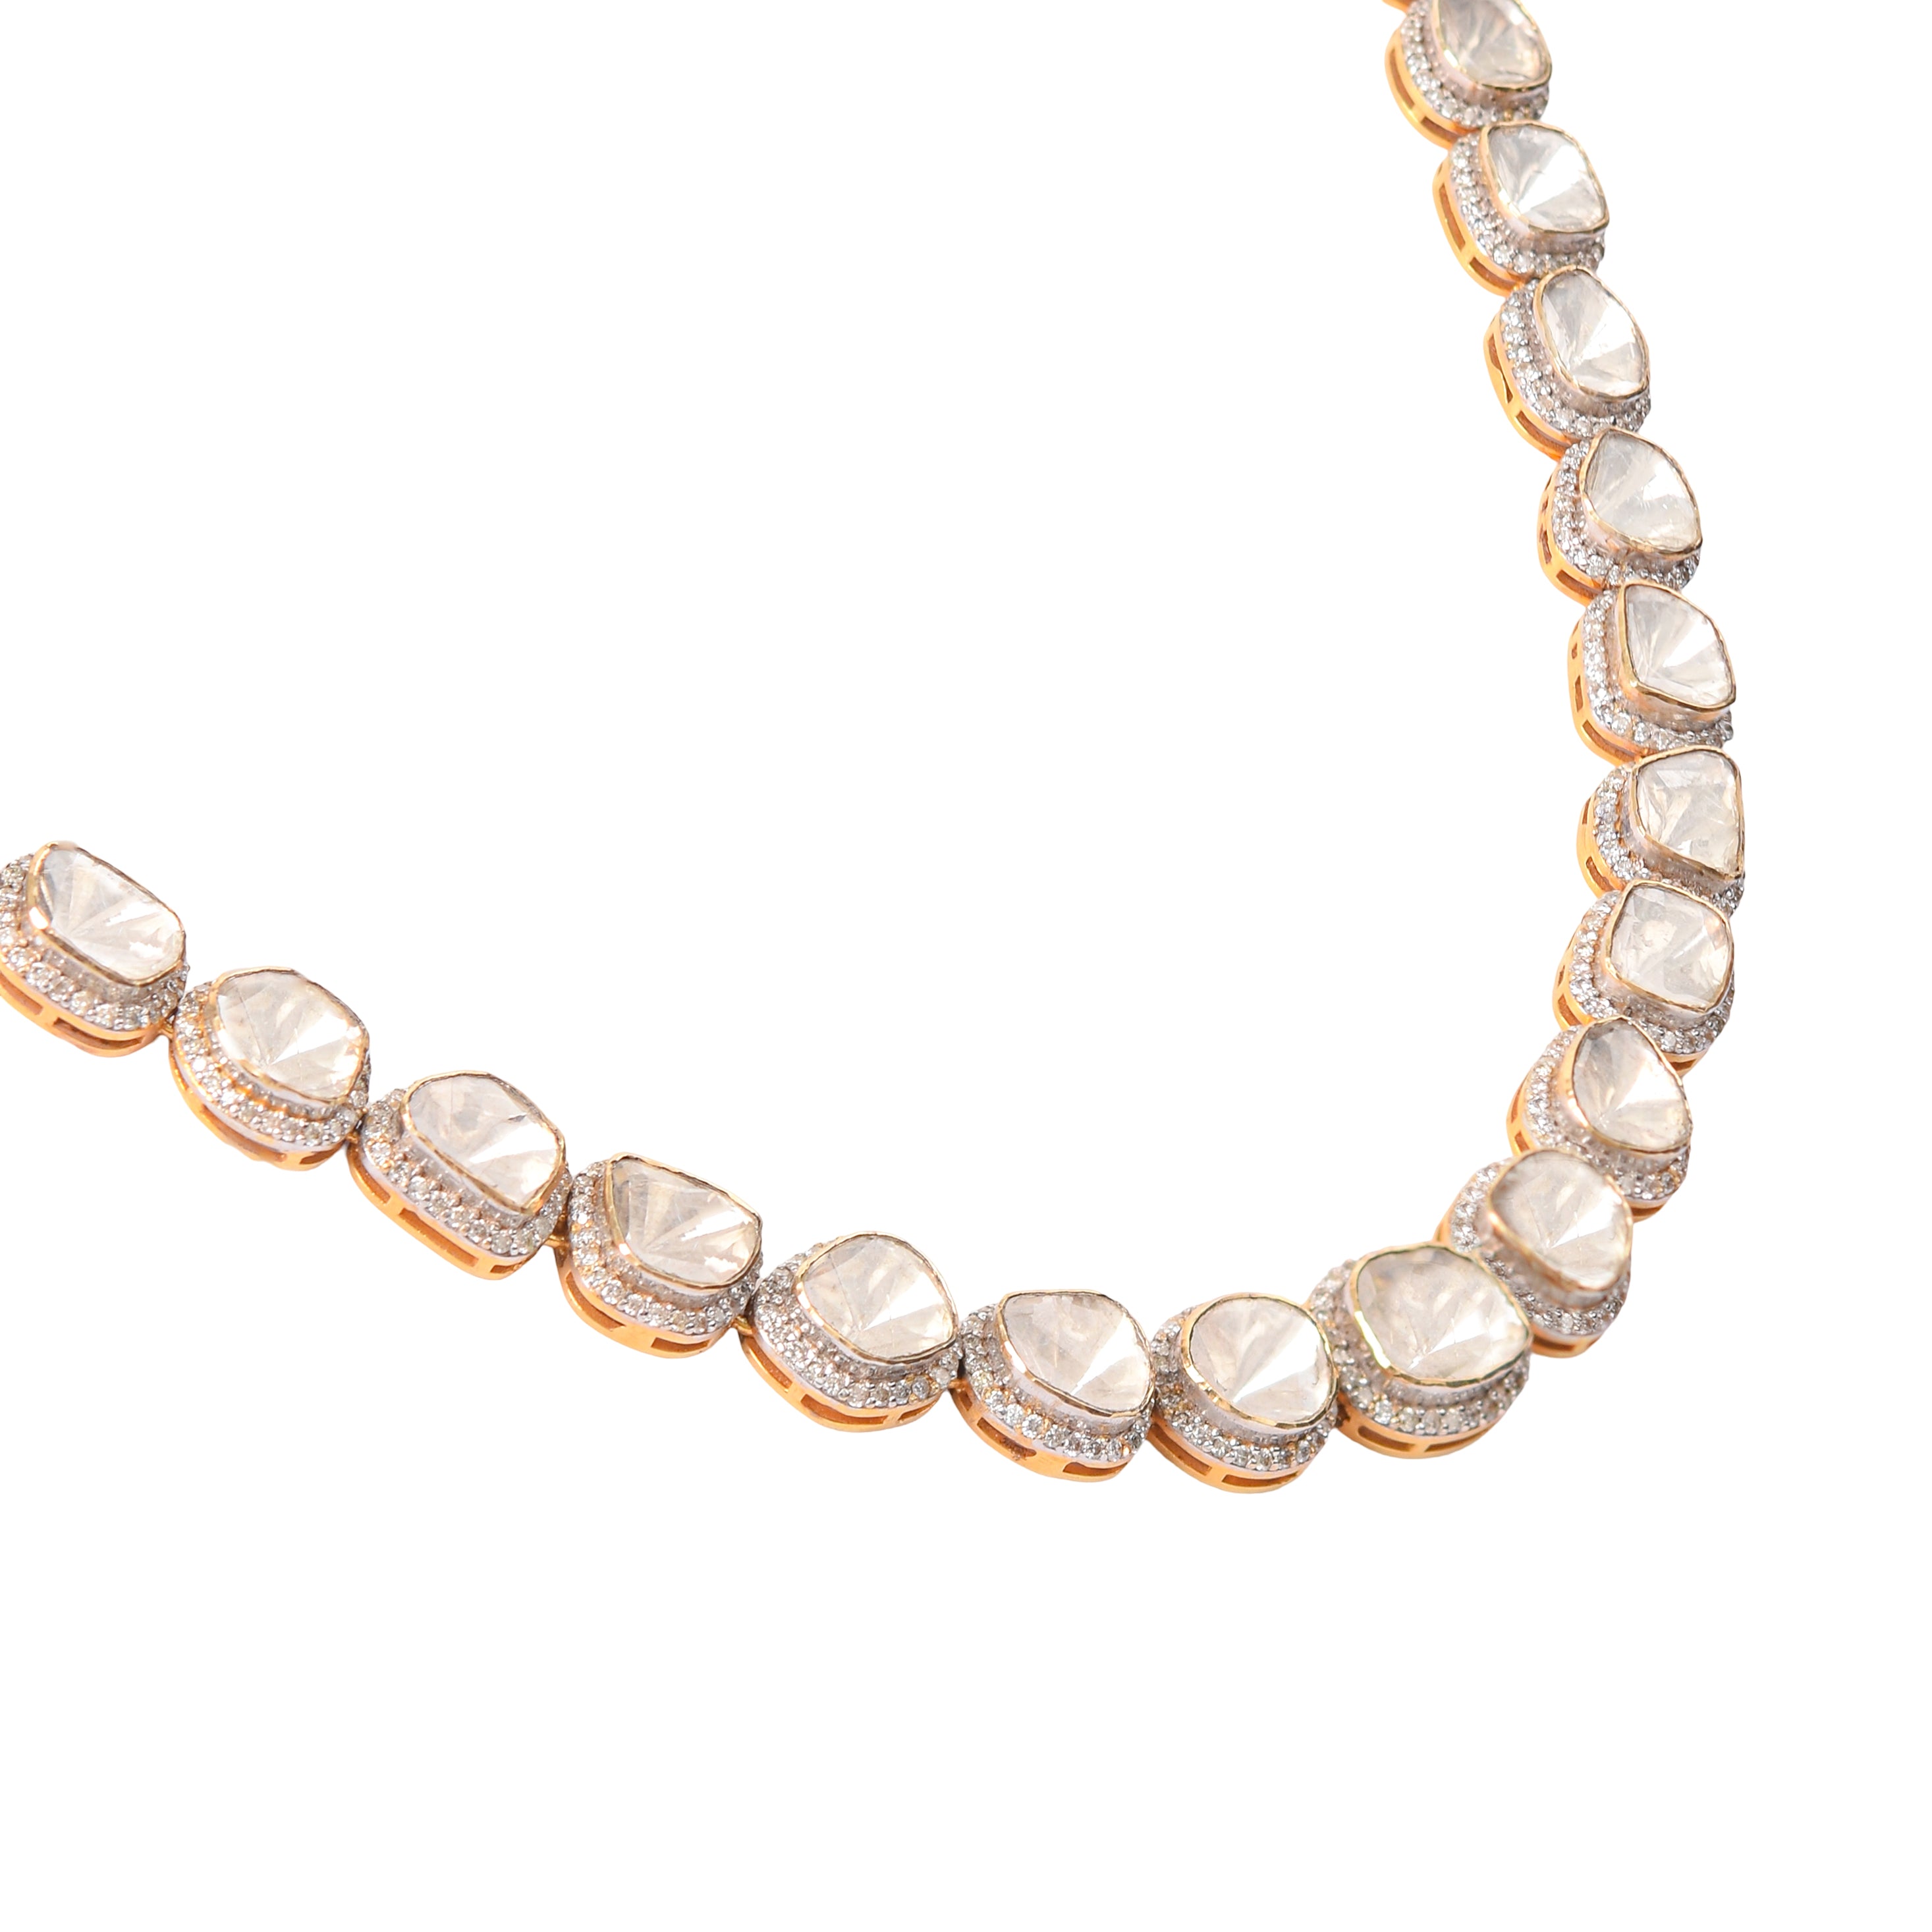 Timeless elegance with delicate polki encased in diamonds, lustrous 18k gold chain